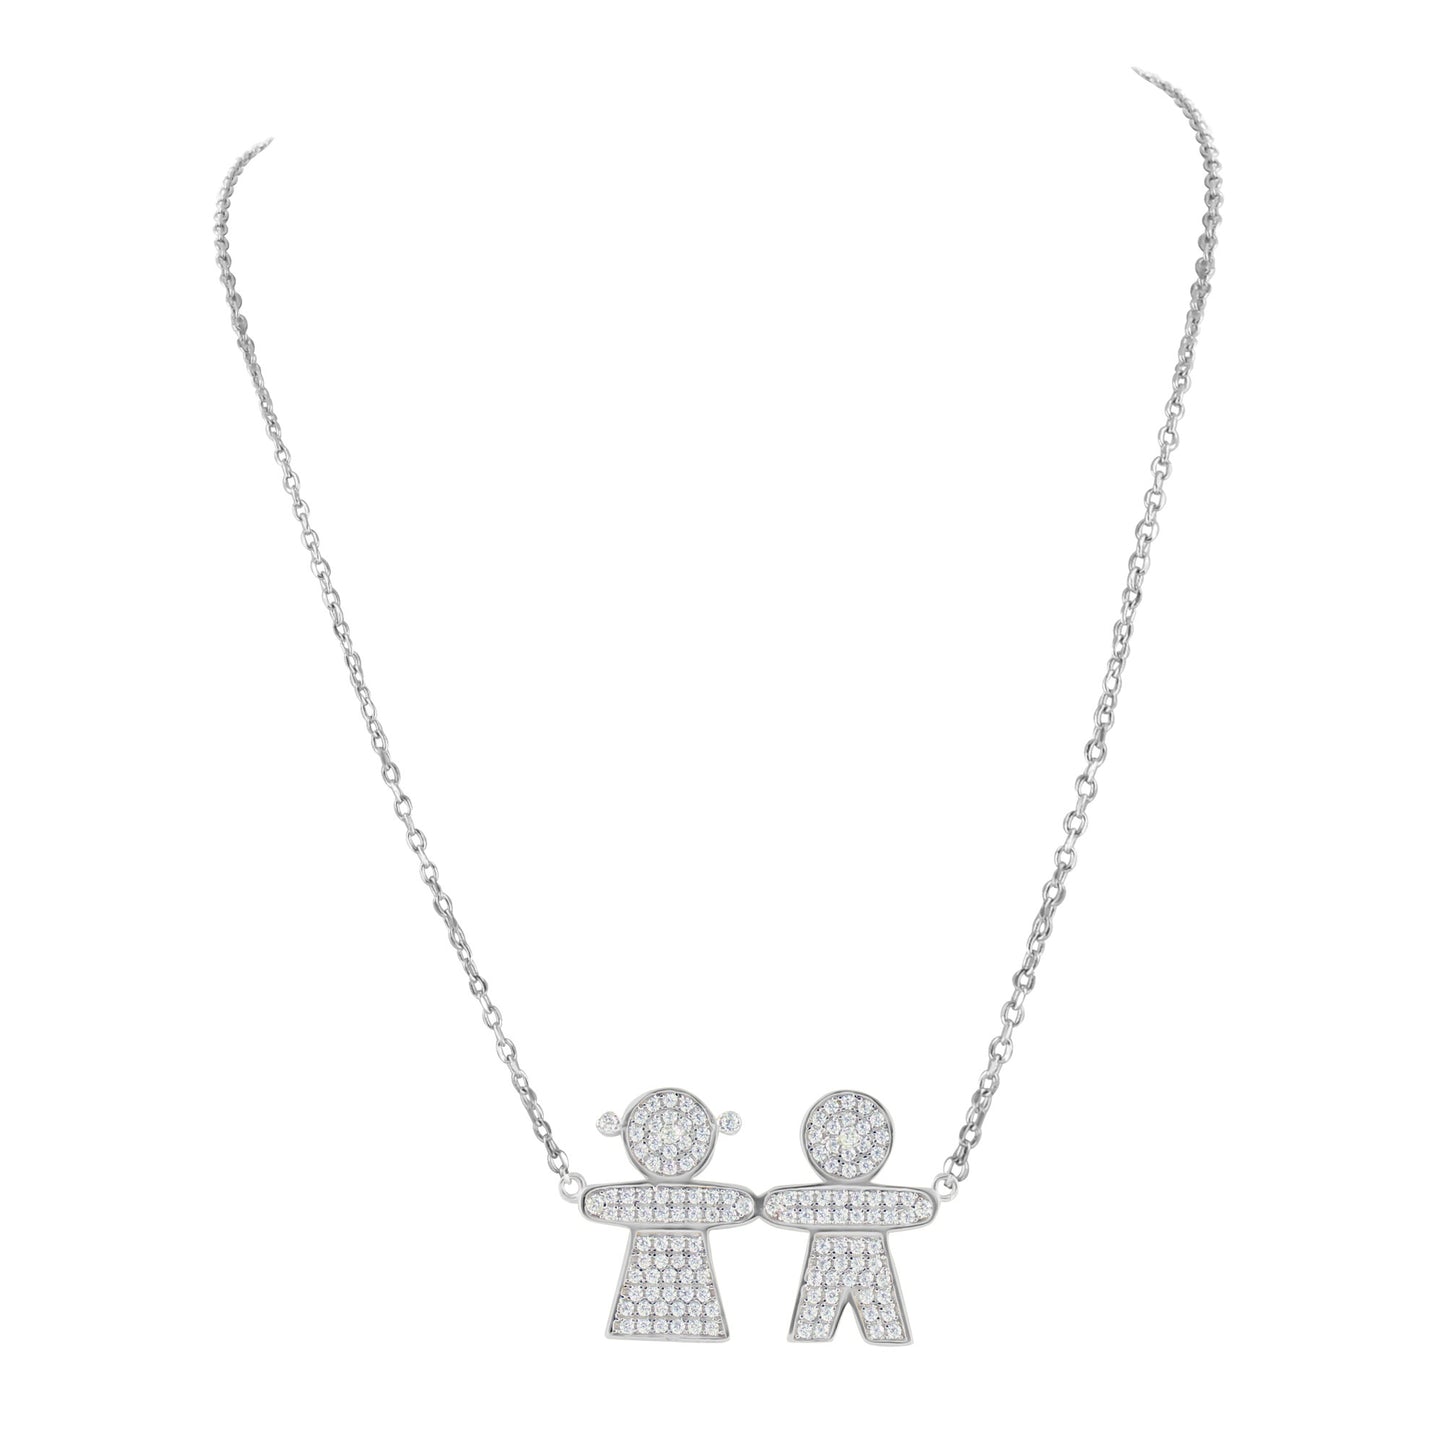 Boy Girl Child Pendant Sterling Silver Necklace